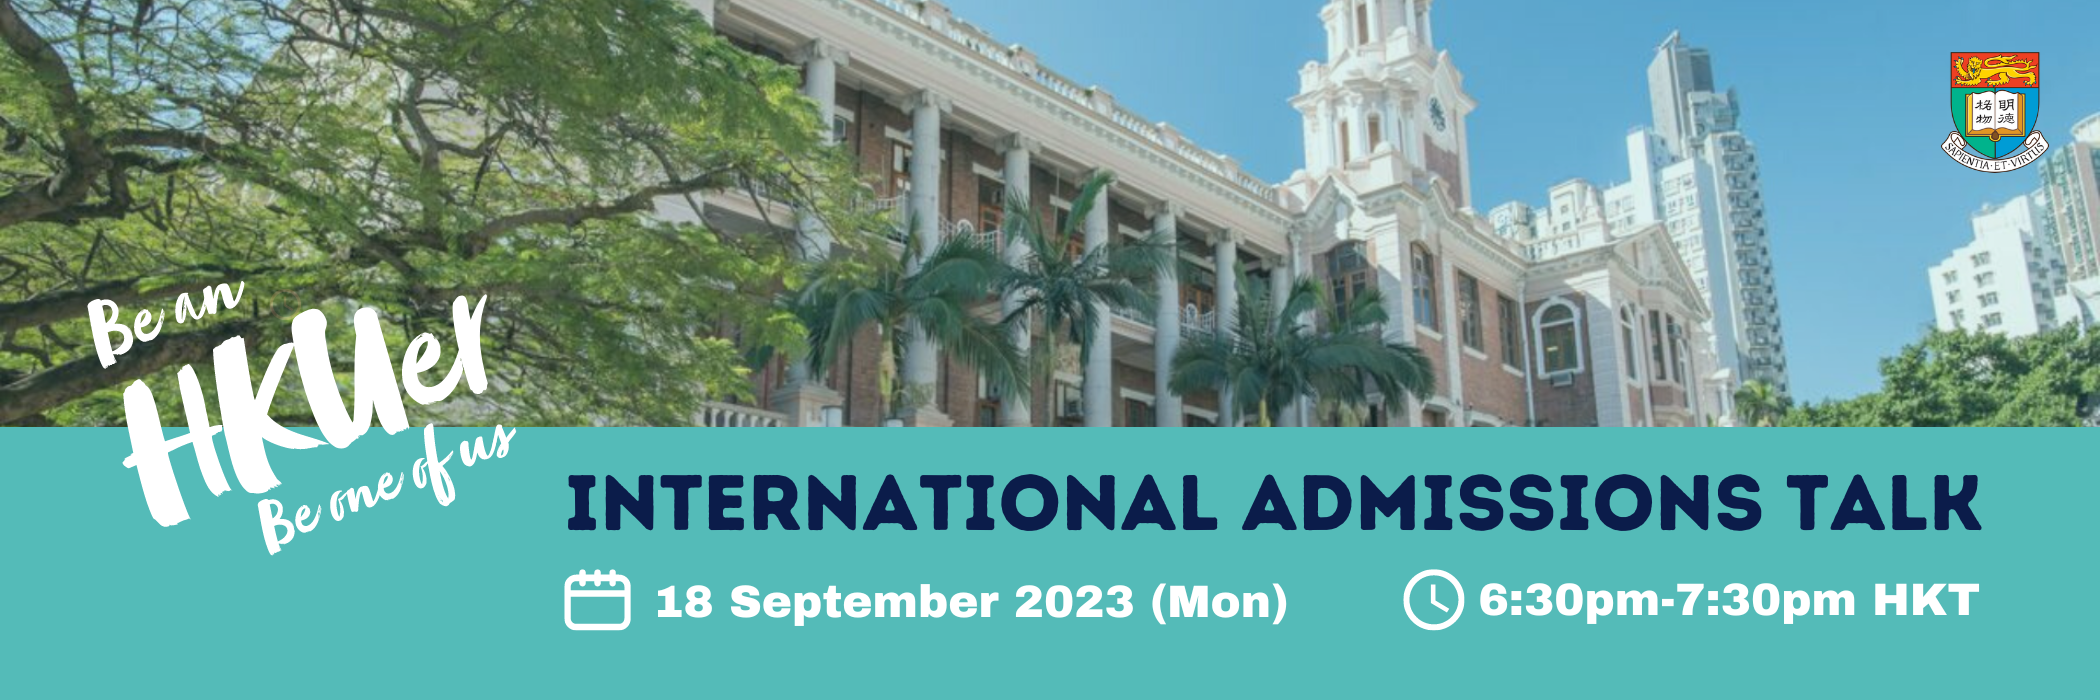 Banner for International admissions talk